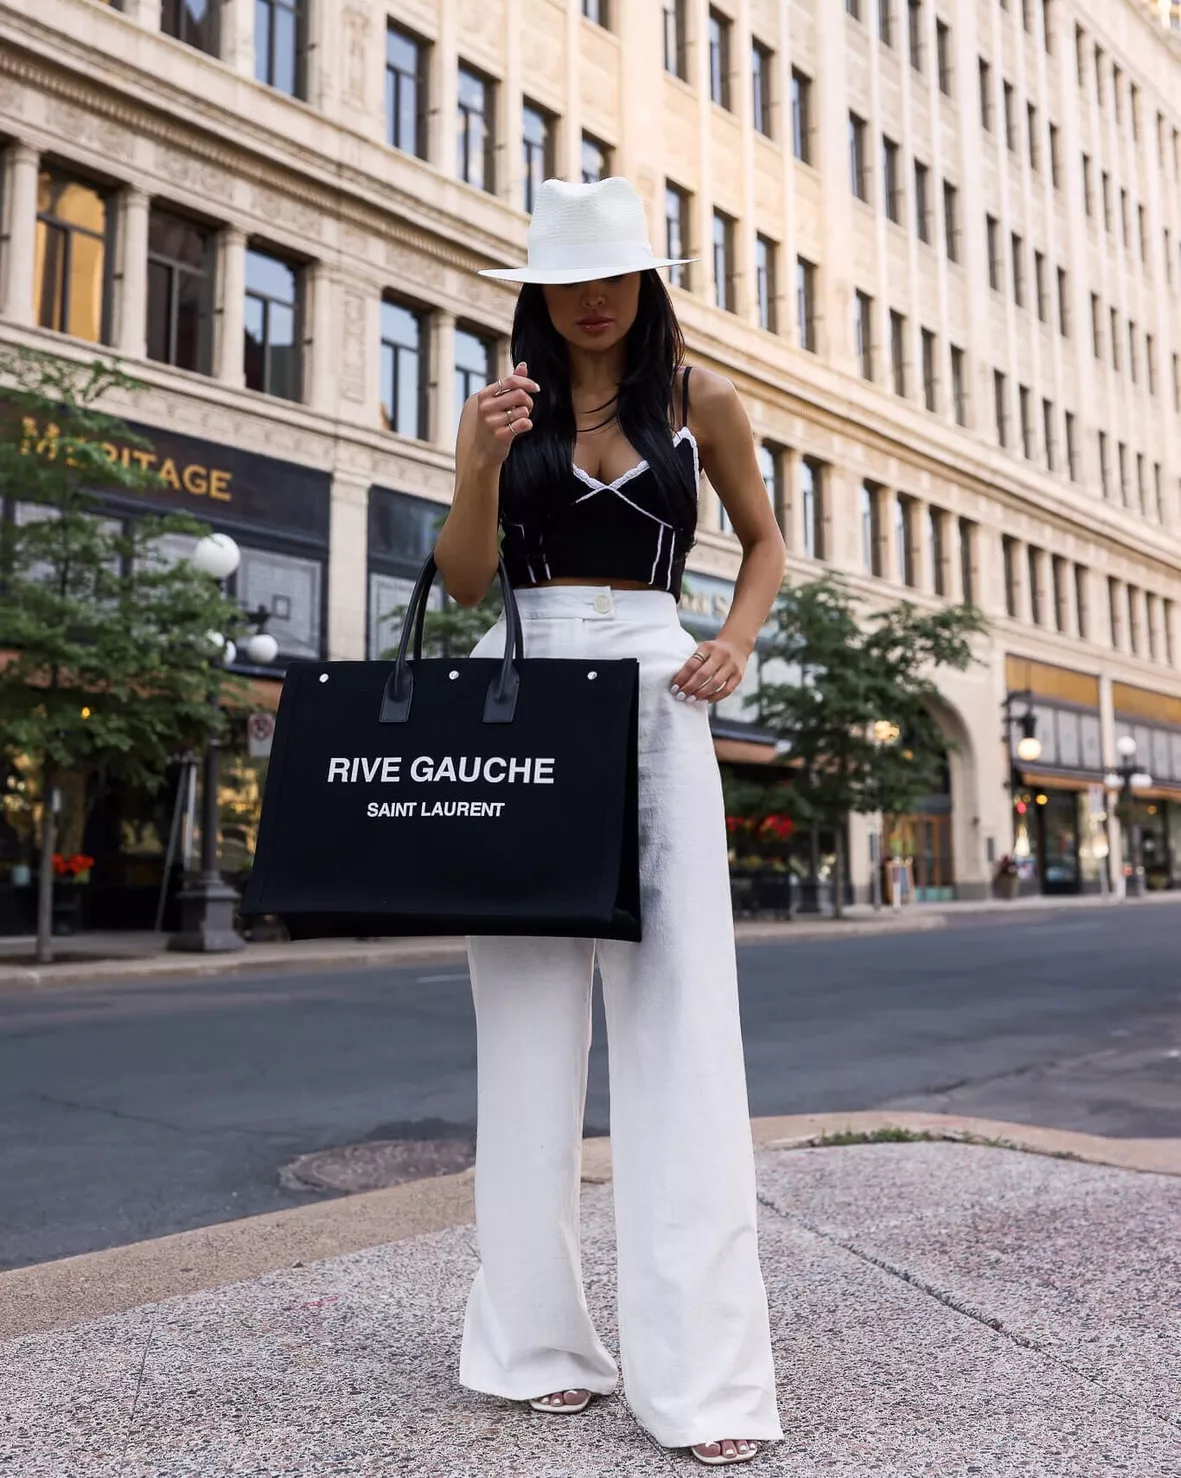 Saint Laurent - Authenticated Cabas Rive Gauche Handbag - Linen Beige for Women, Never Worn